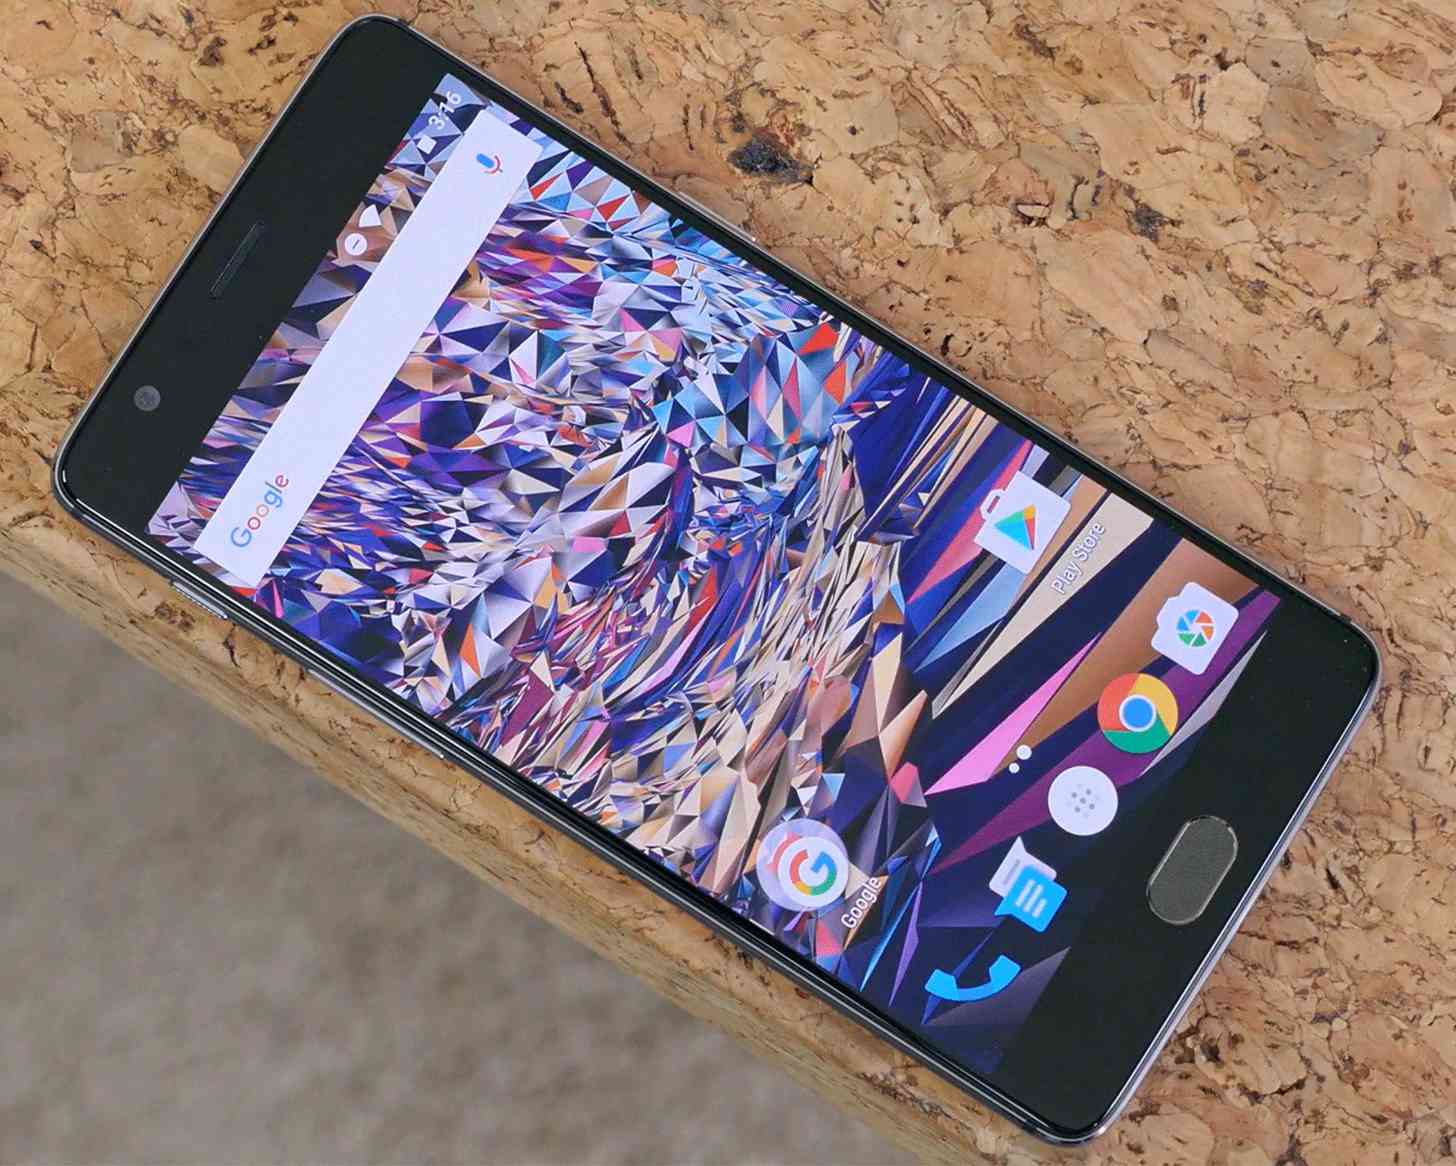 OnePlus 3 hands-on